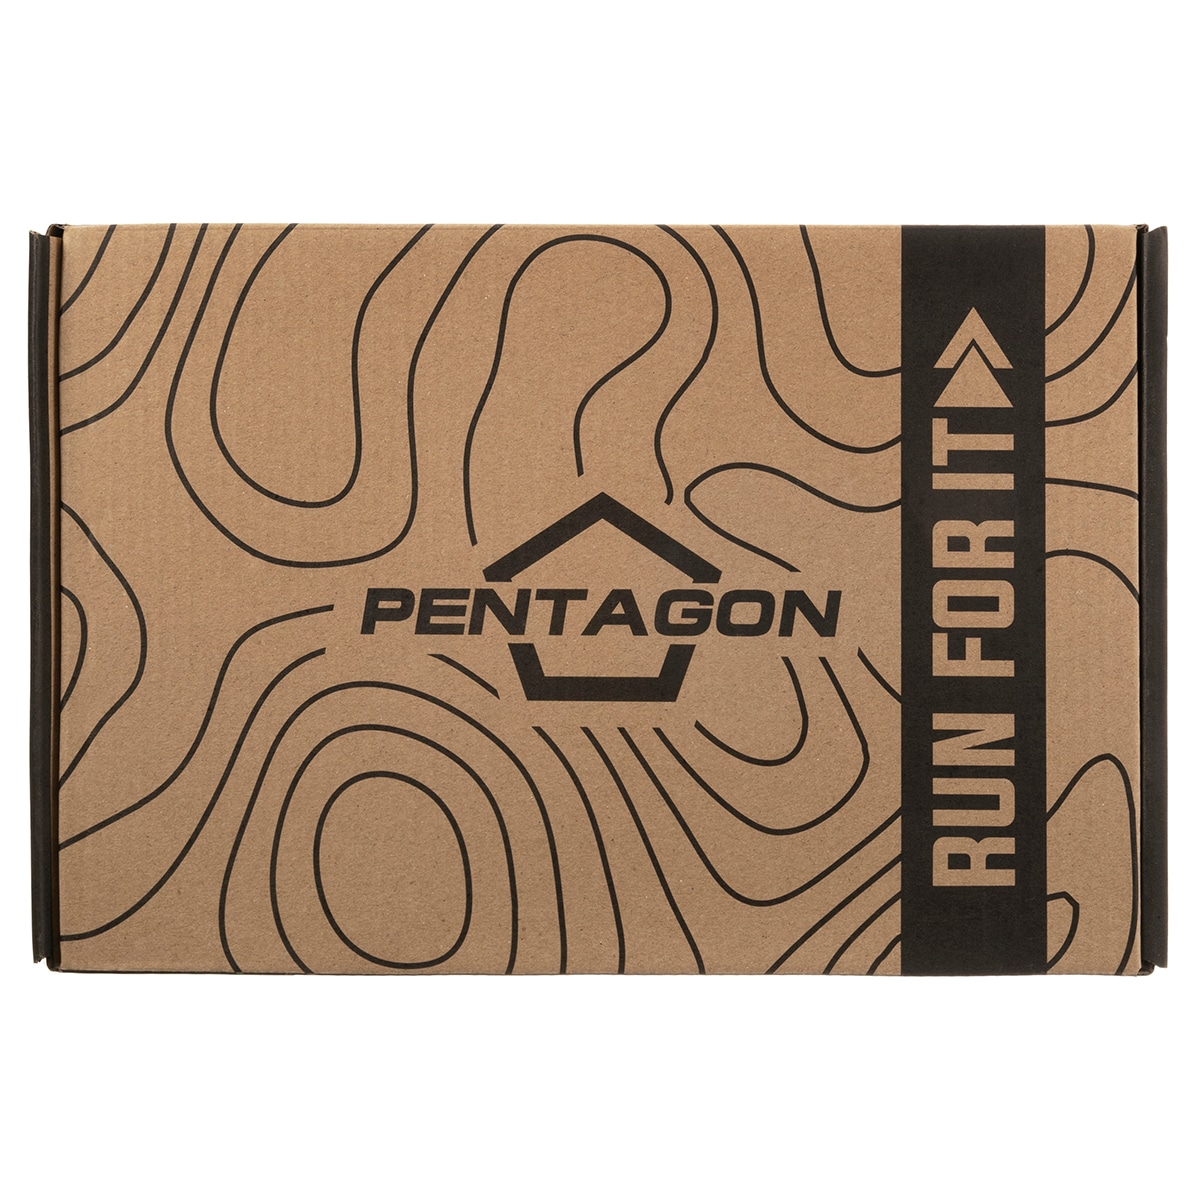 Buty Pentagon Kion Trekking - Stealth Black (K15042-31)